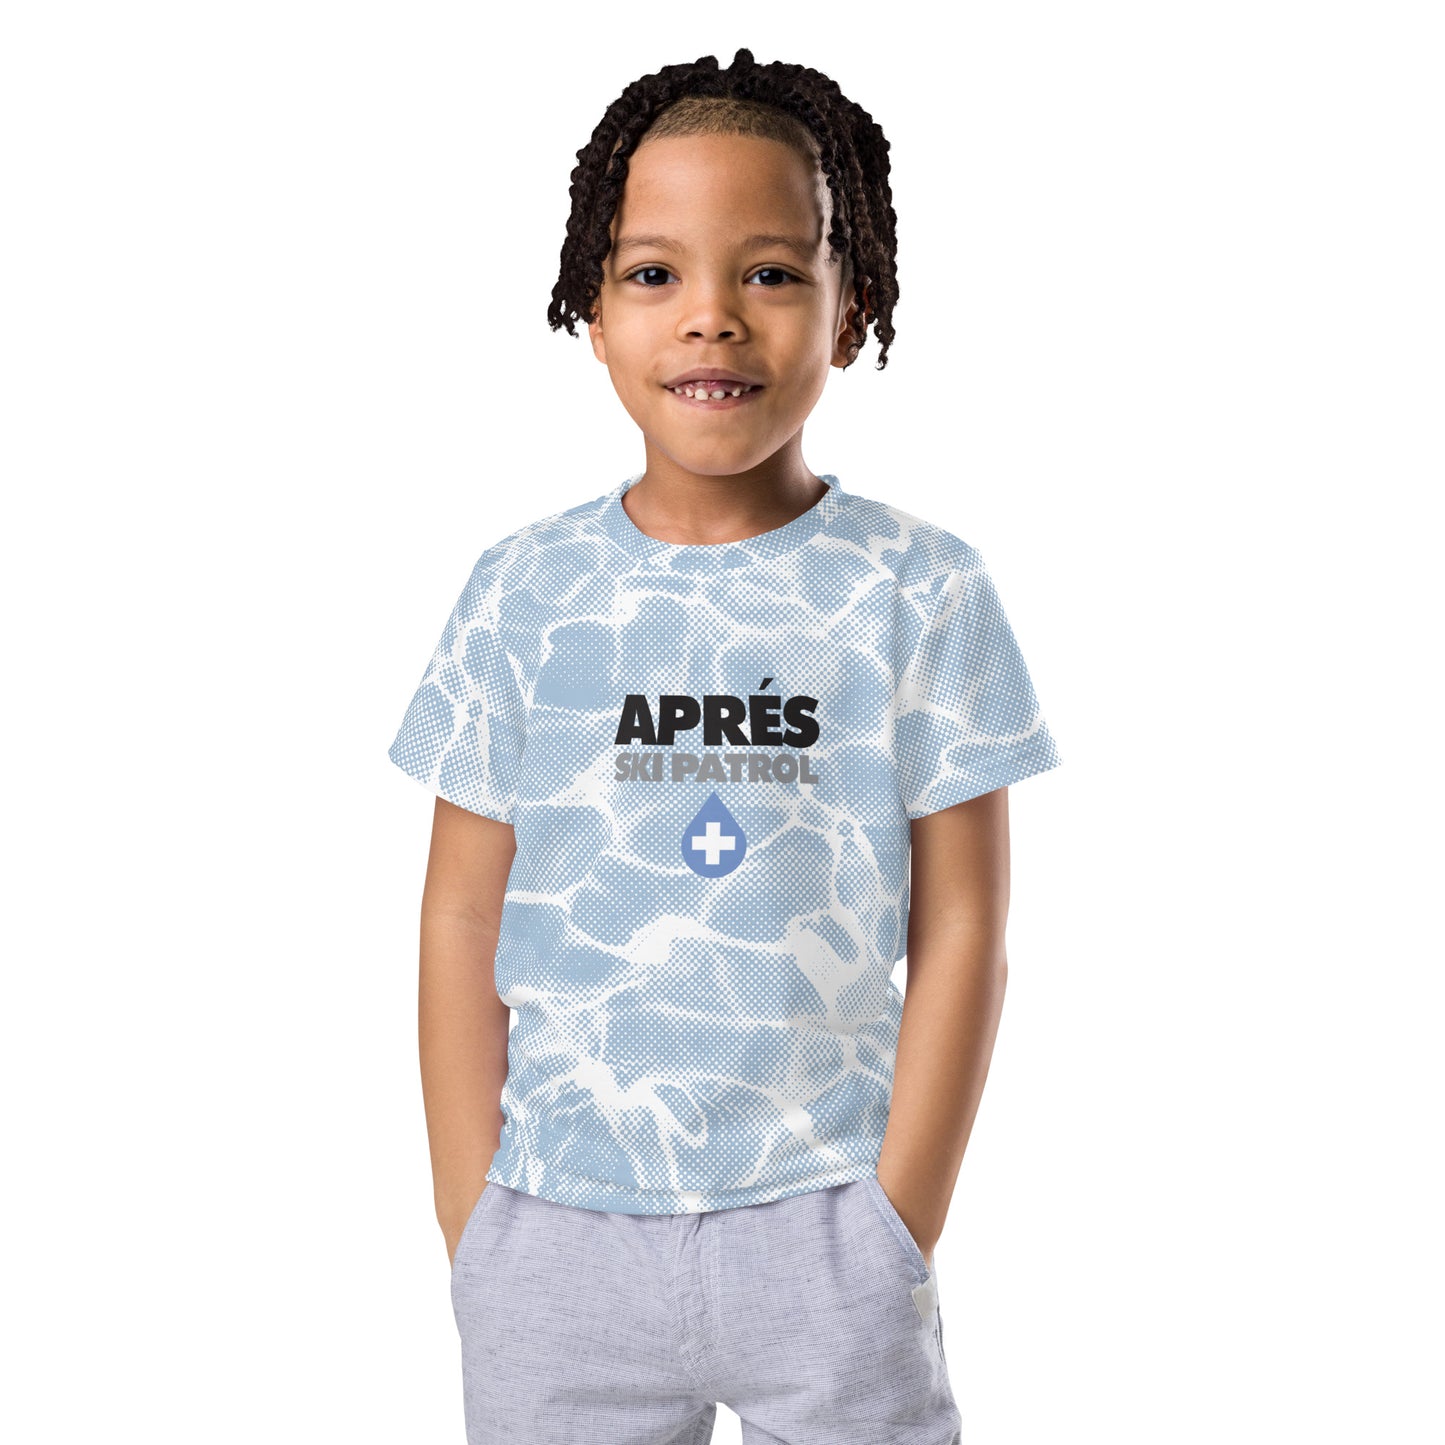 CS0025 - 03001 - AOP Aprés Ski Patrol Unisex Kids crew neck t-shirt